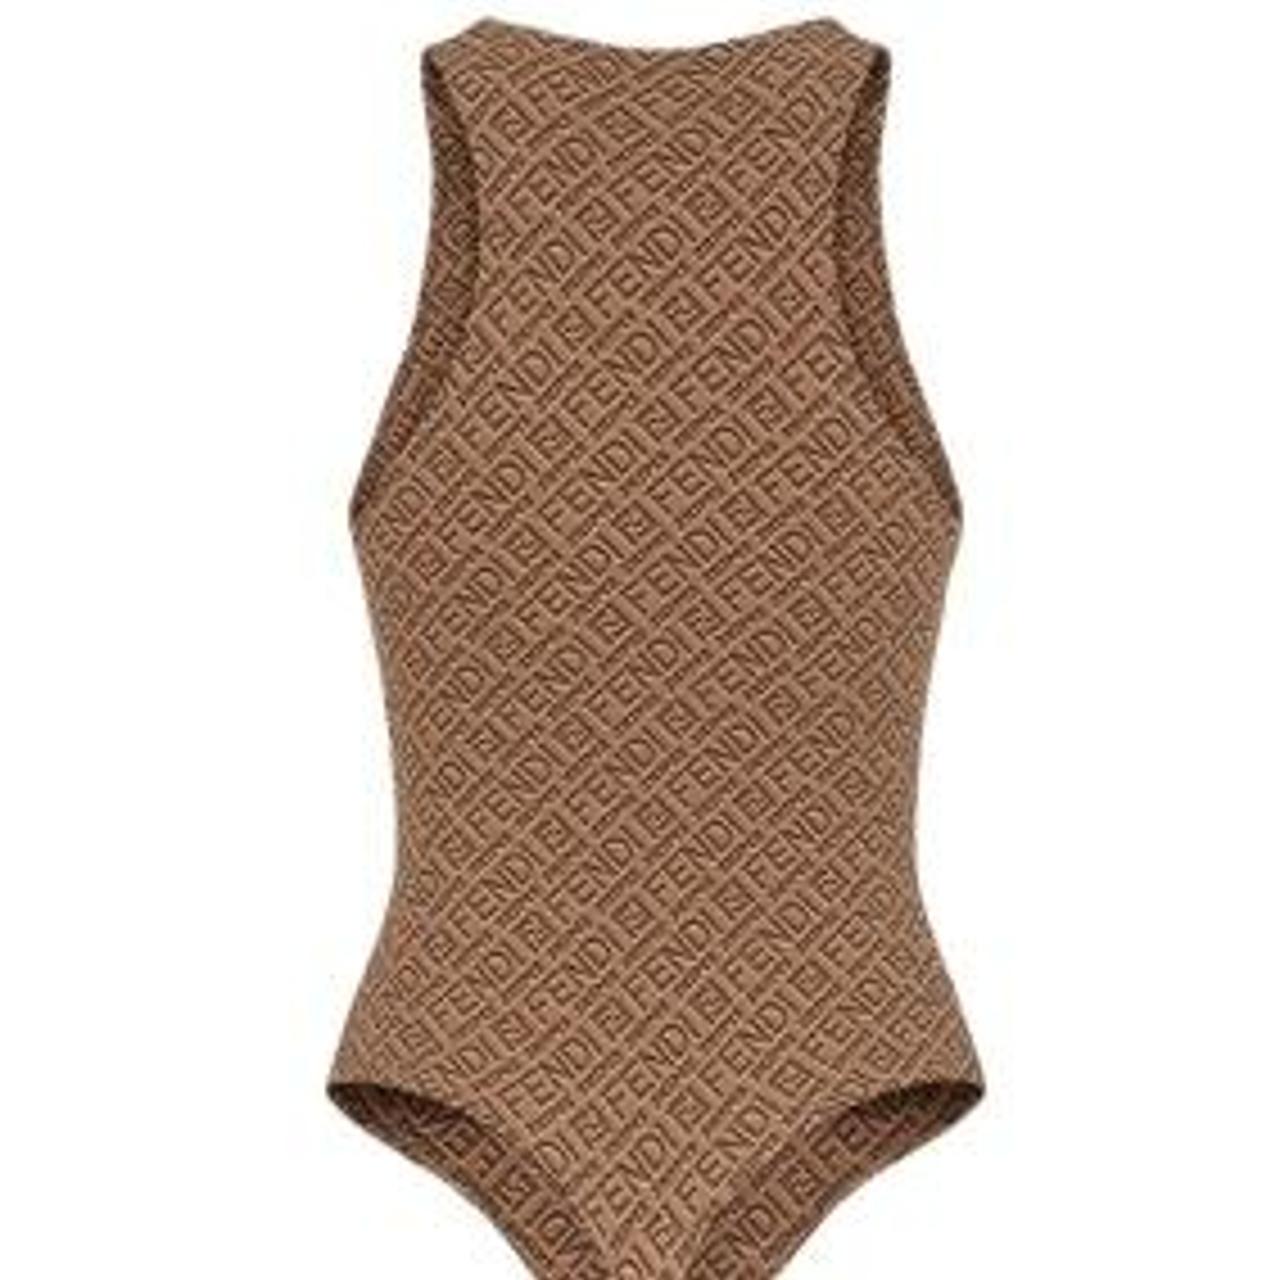 Fendi Women's Tan and Brown Bodysuit (2)